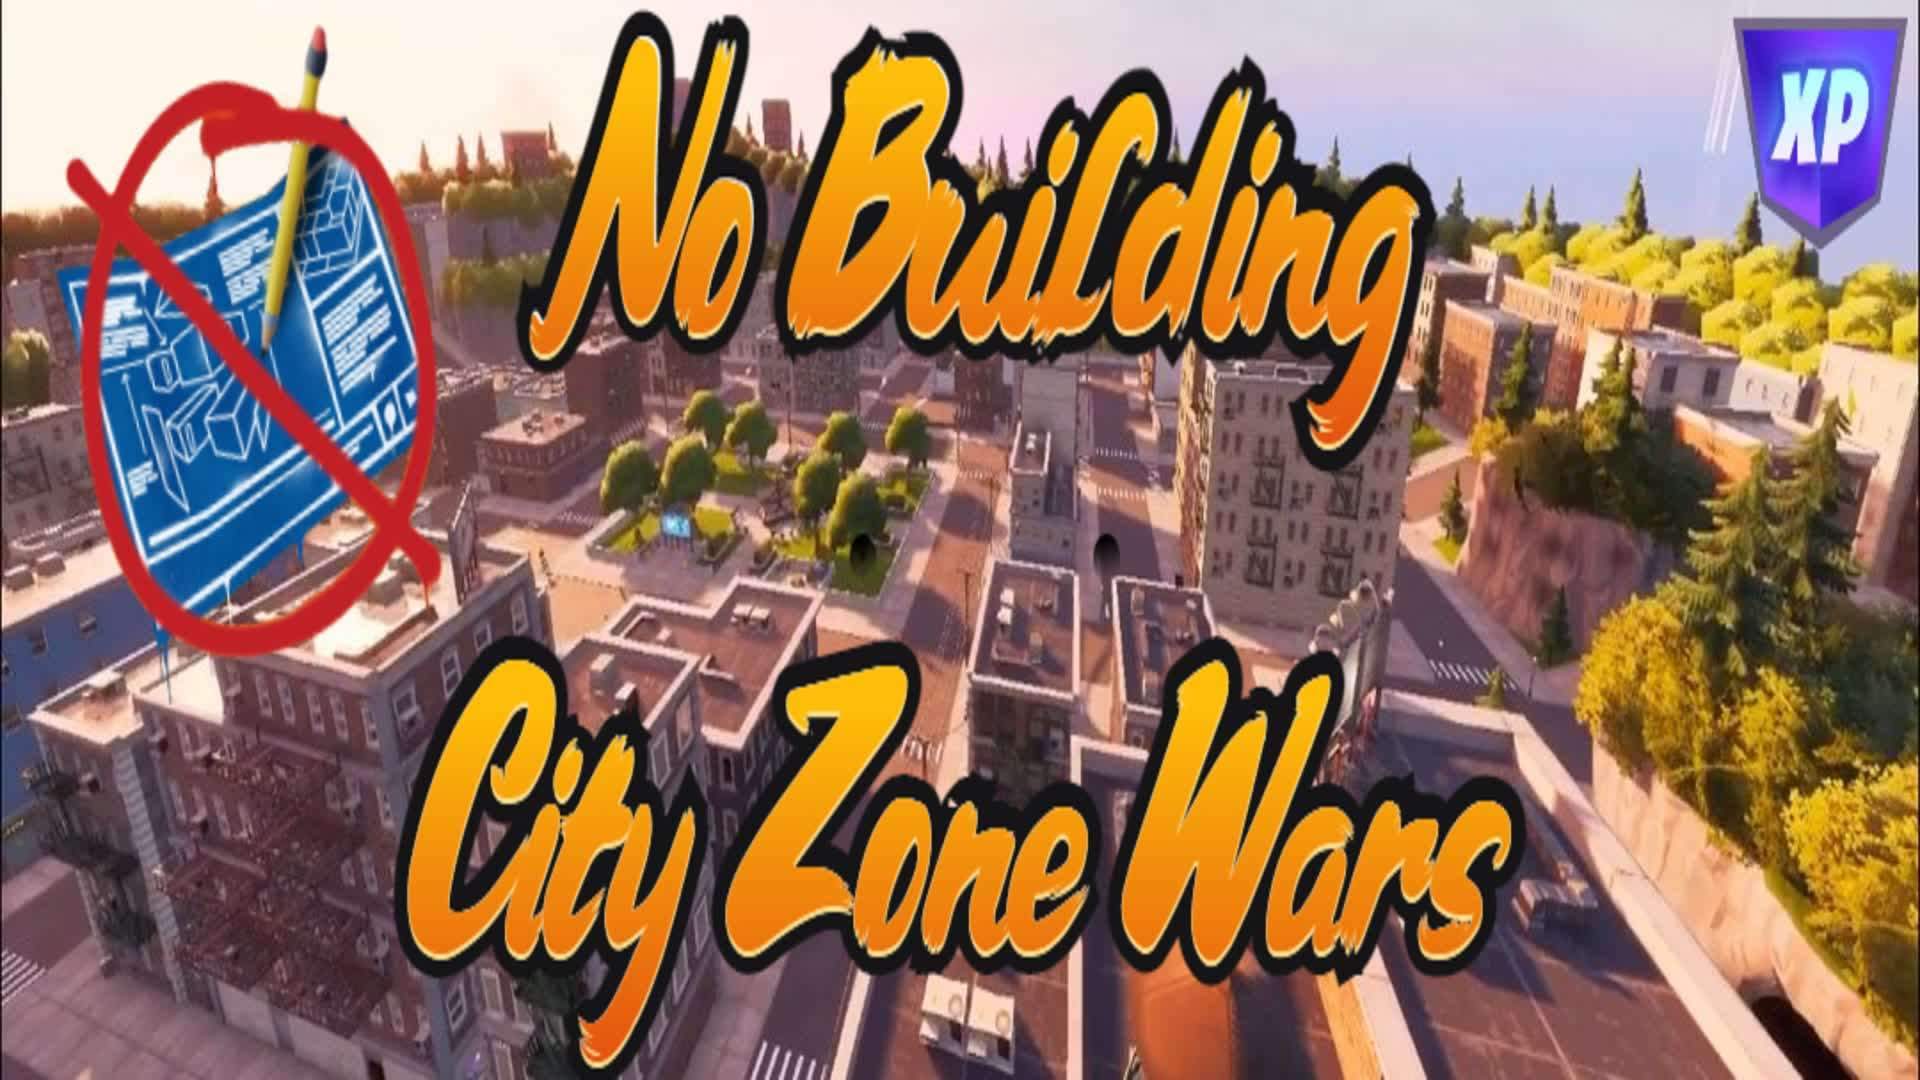 TOWN ZONE WARS - Fortnite Creative Map Code - Dropnite